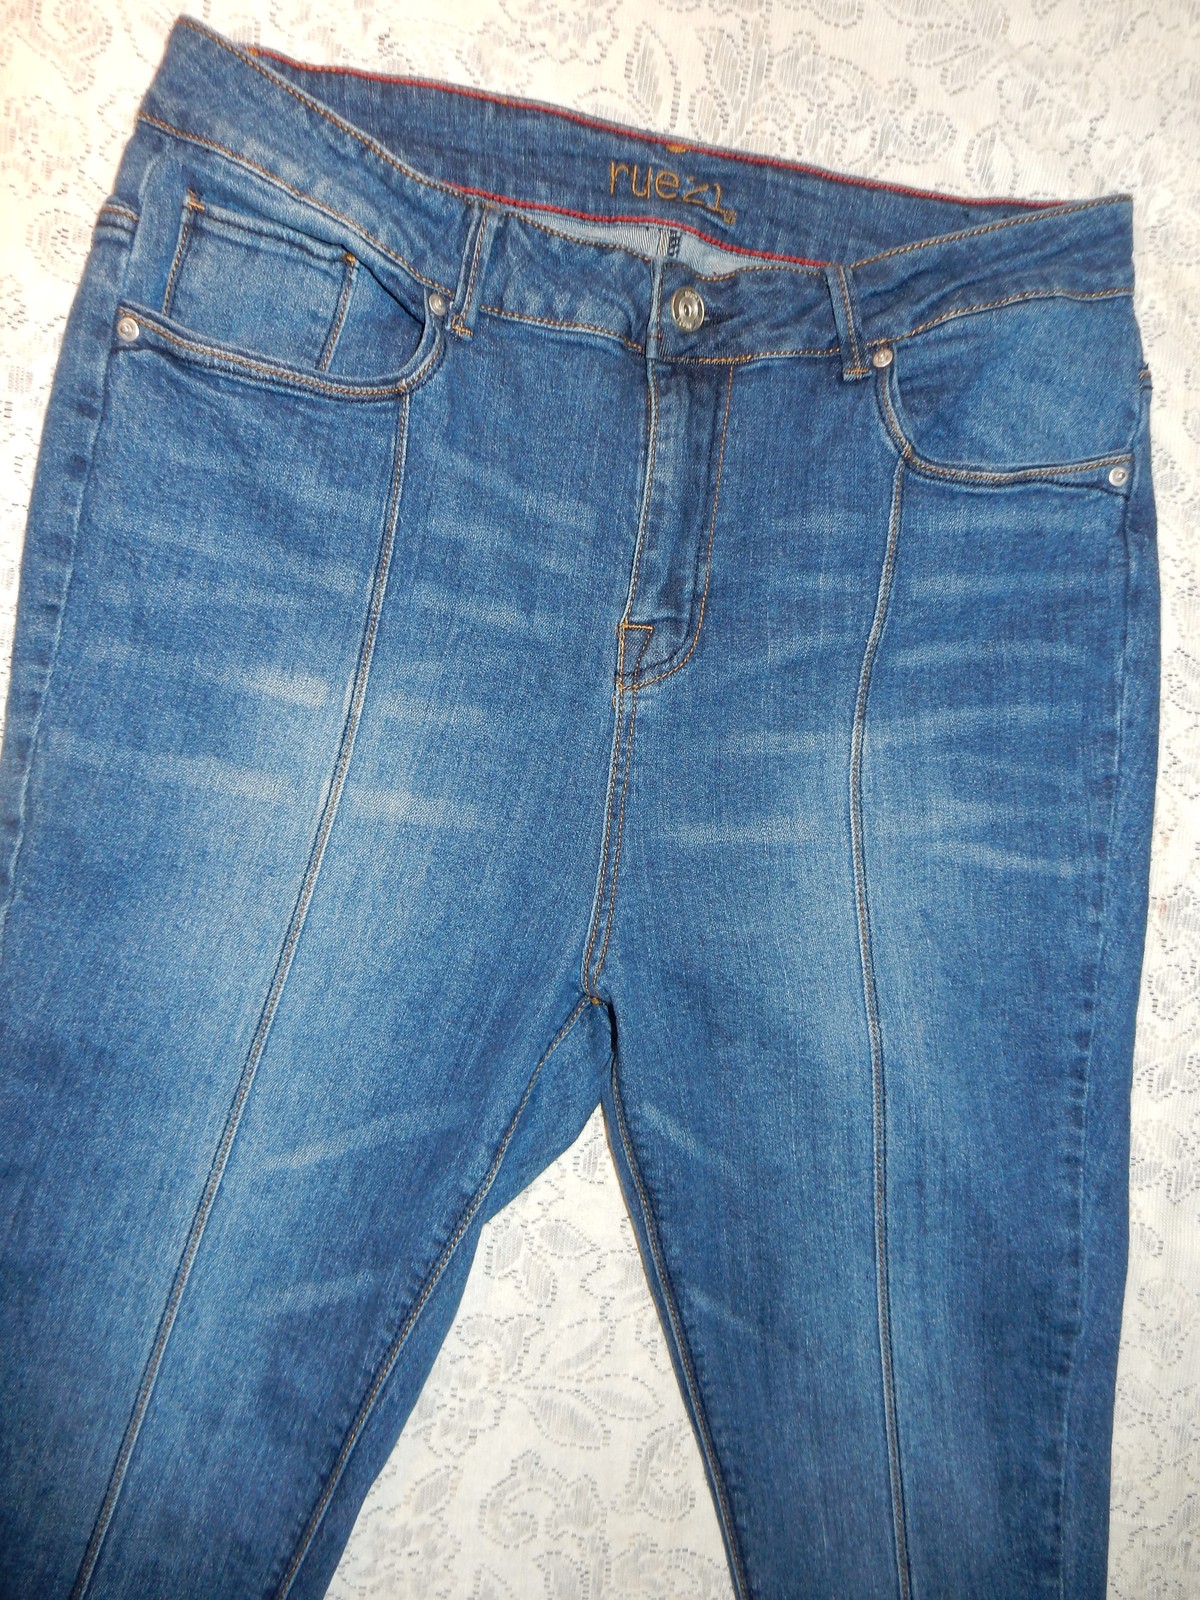 jeans/ jegging rue 21 - Jeans